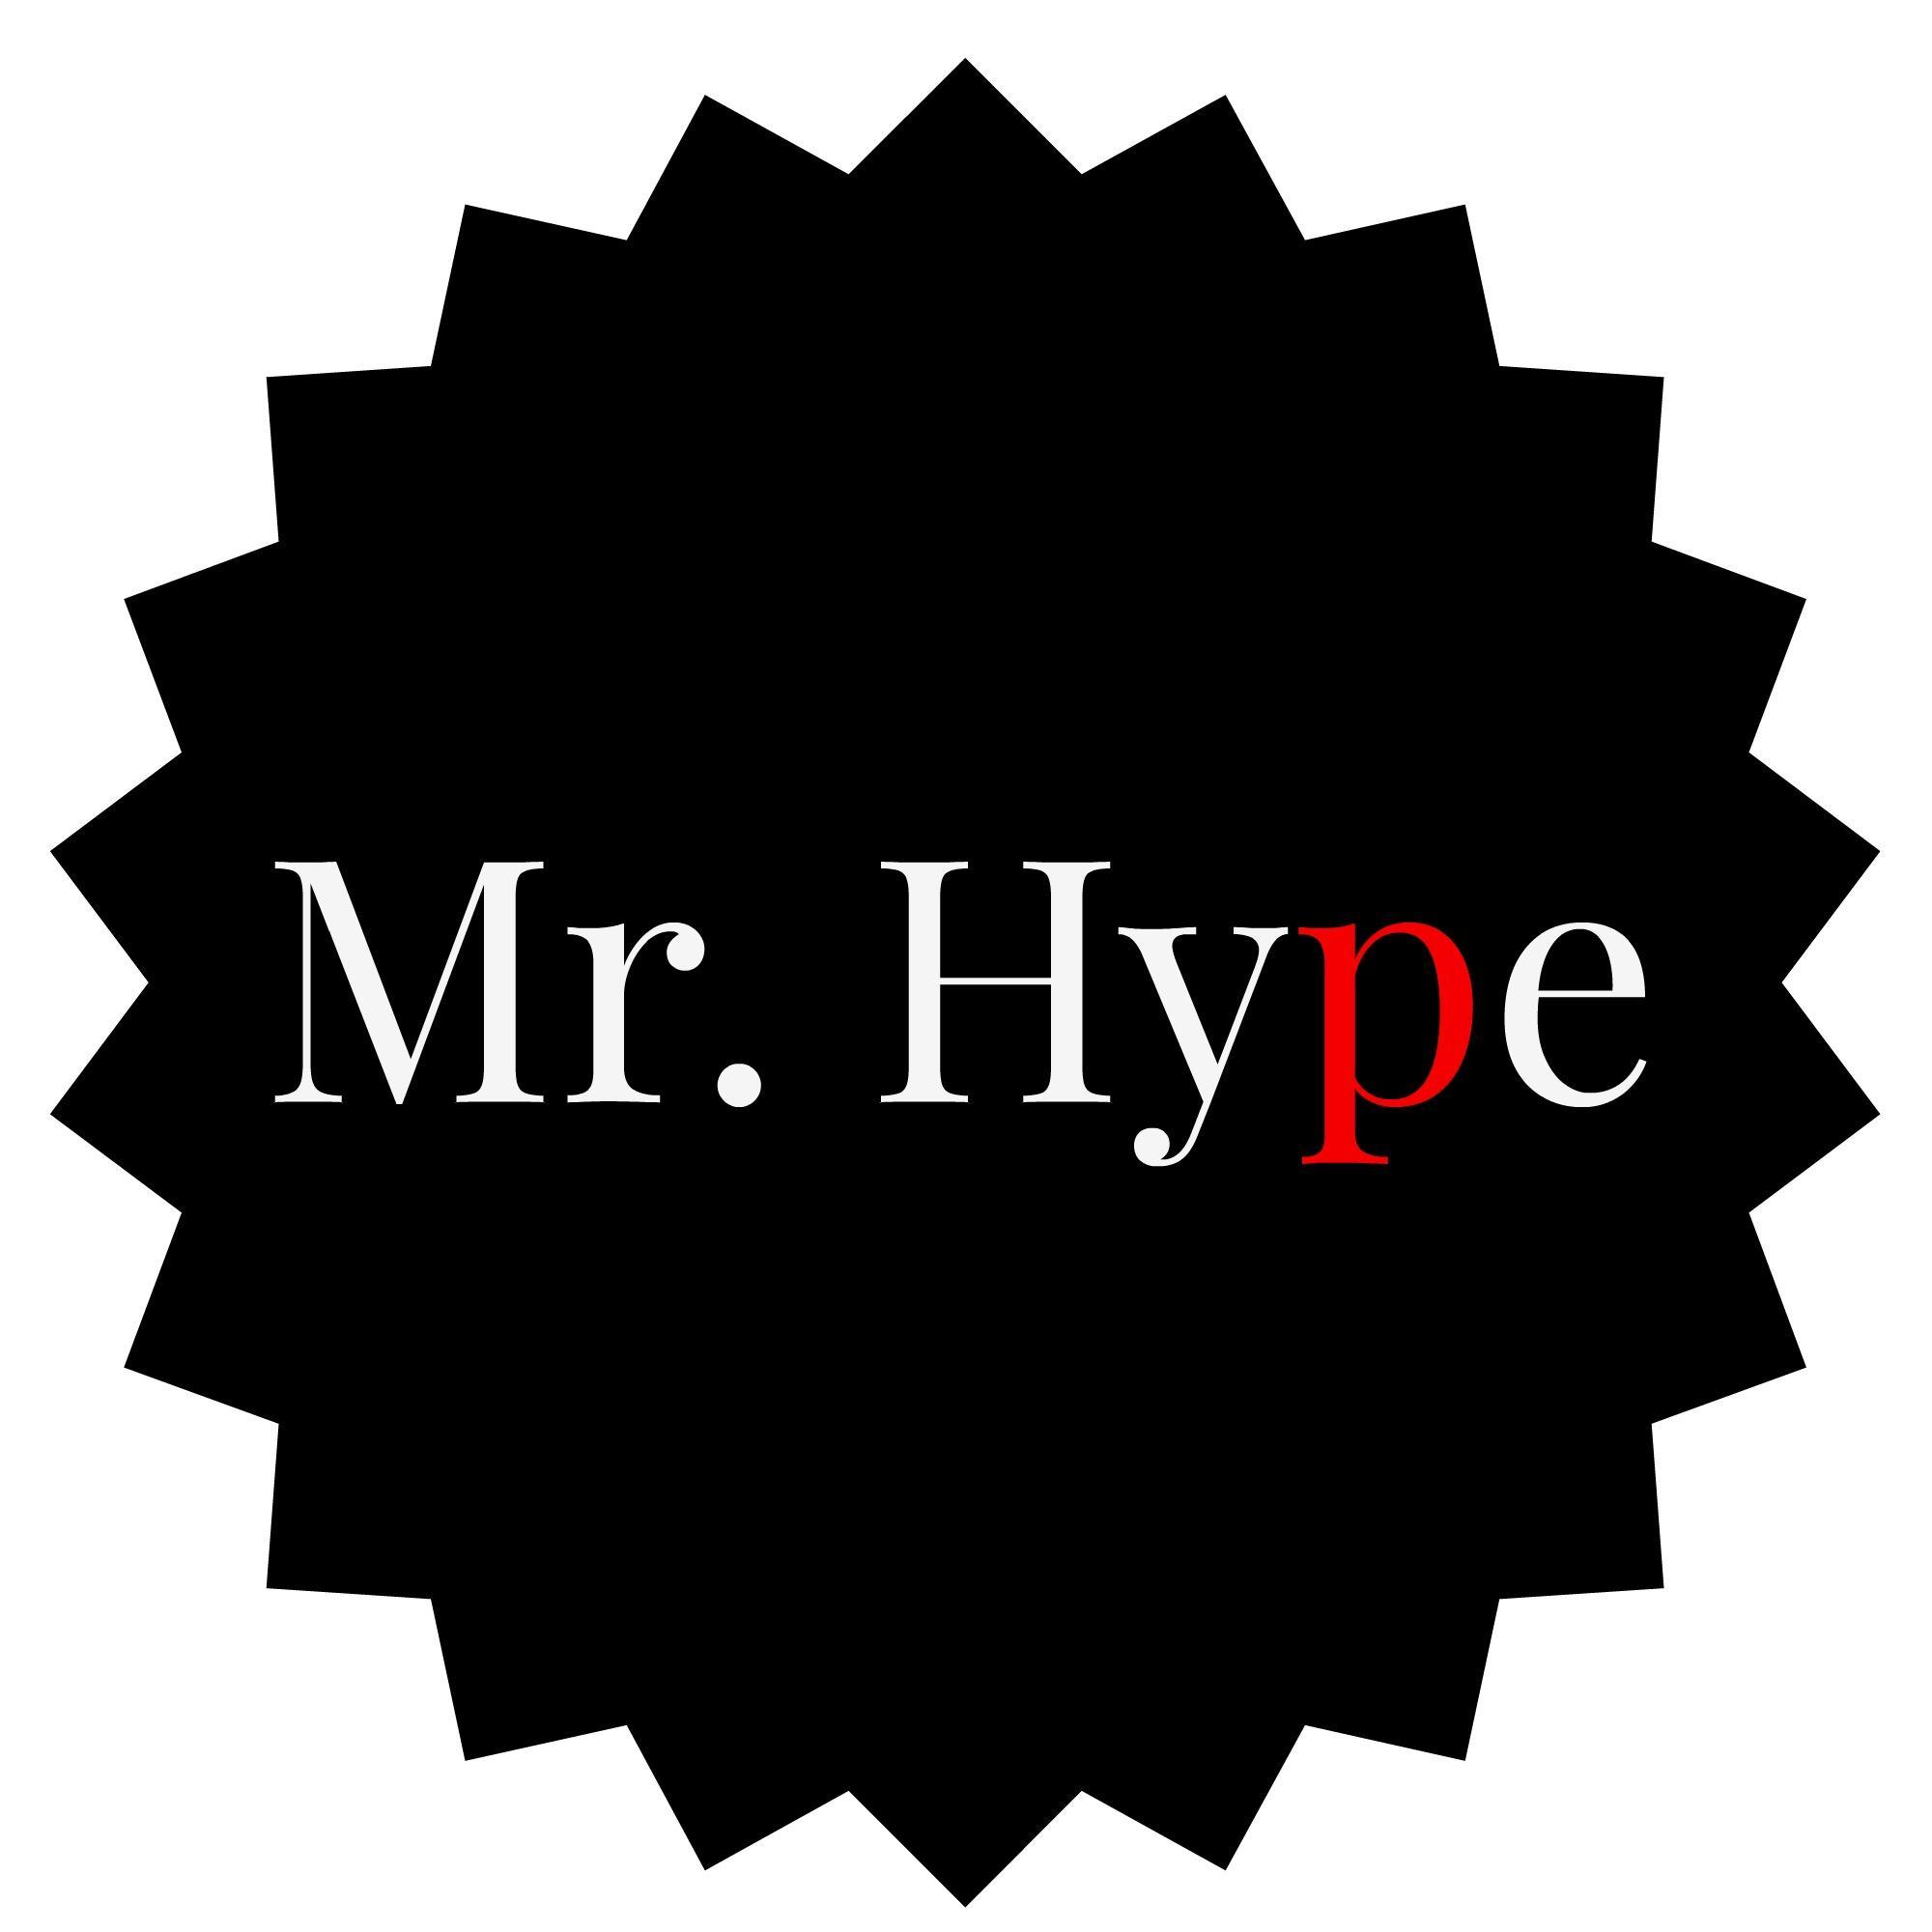 Revista cultural independiente. Mr.Hype.magazine@gmail.com